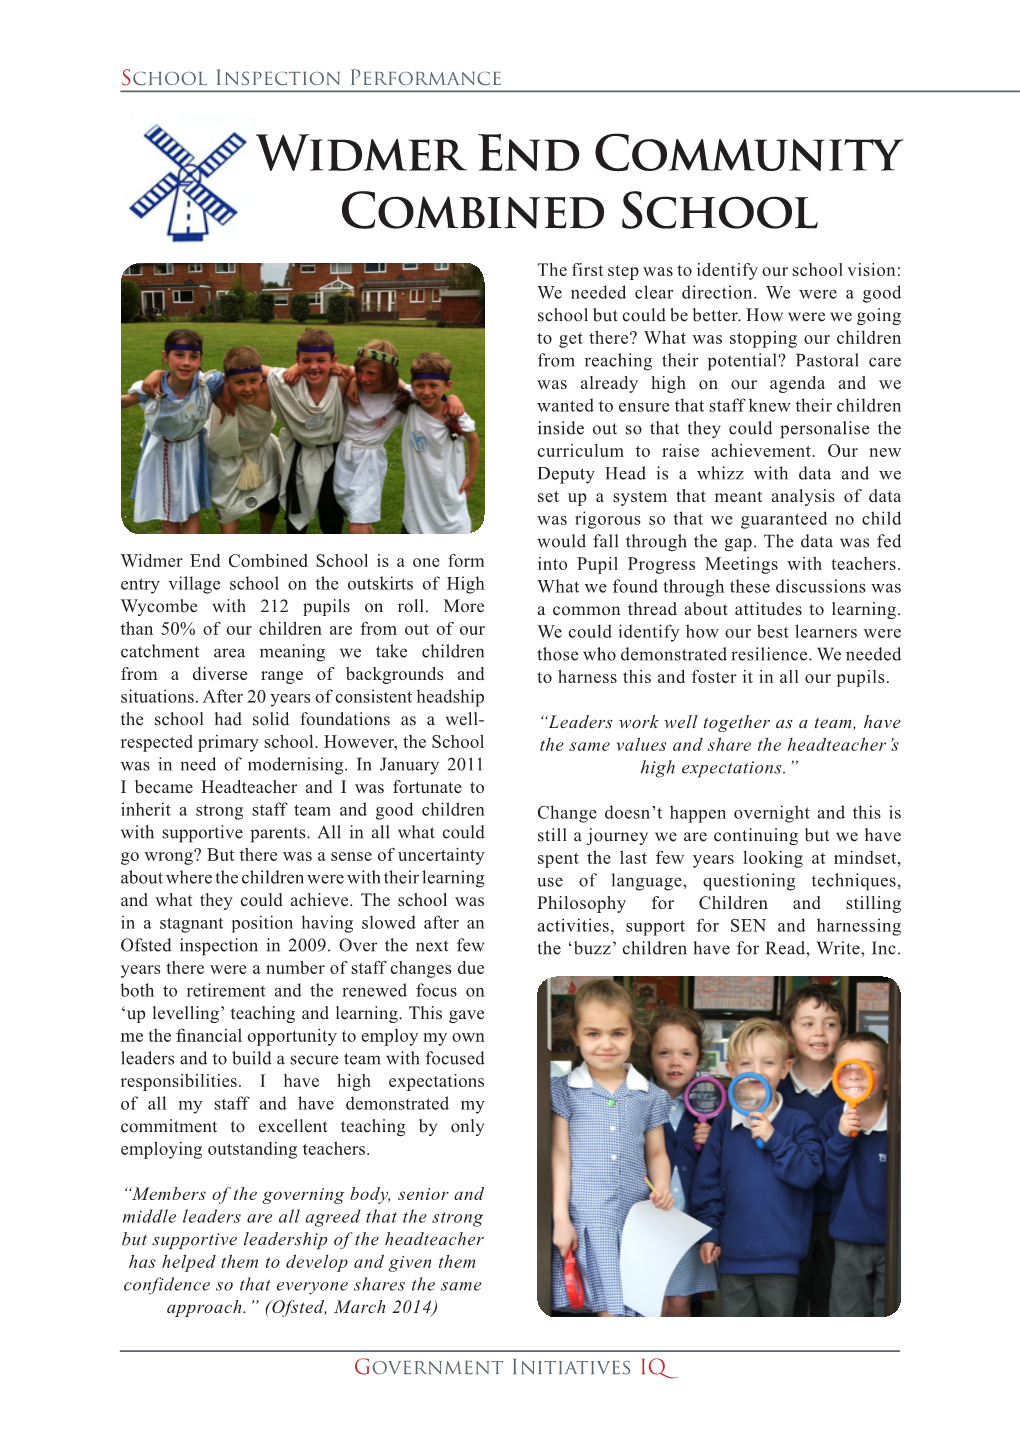 Widmer End Community Combined School